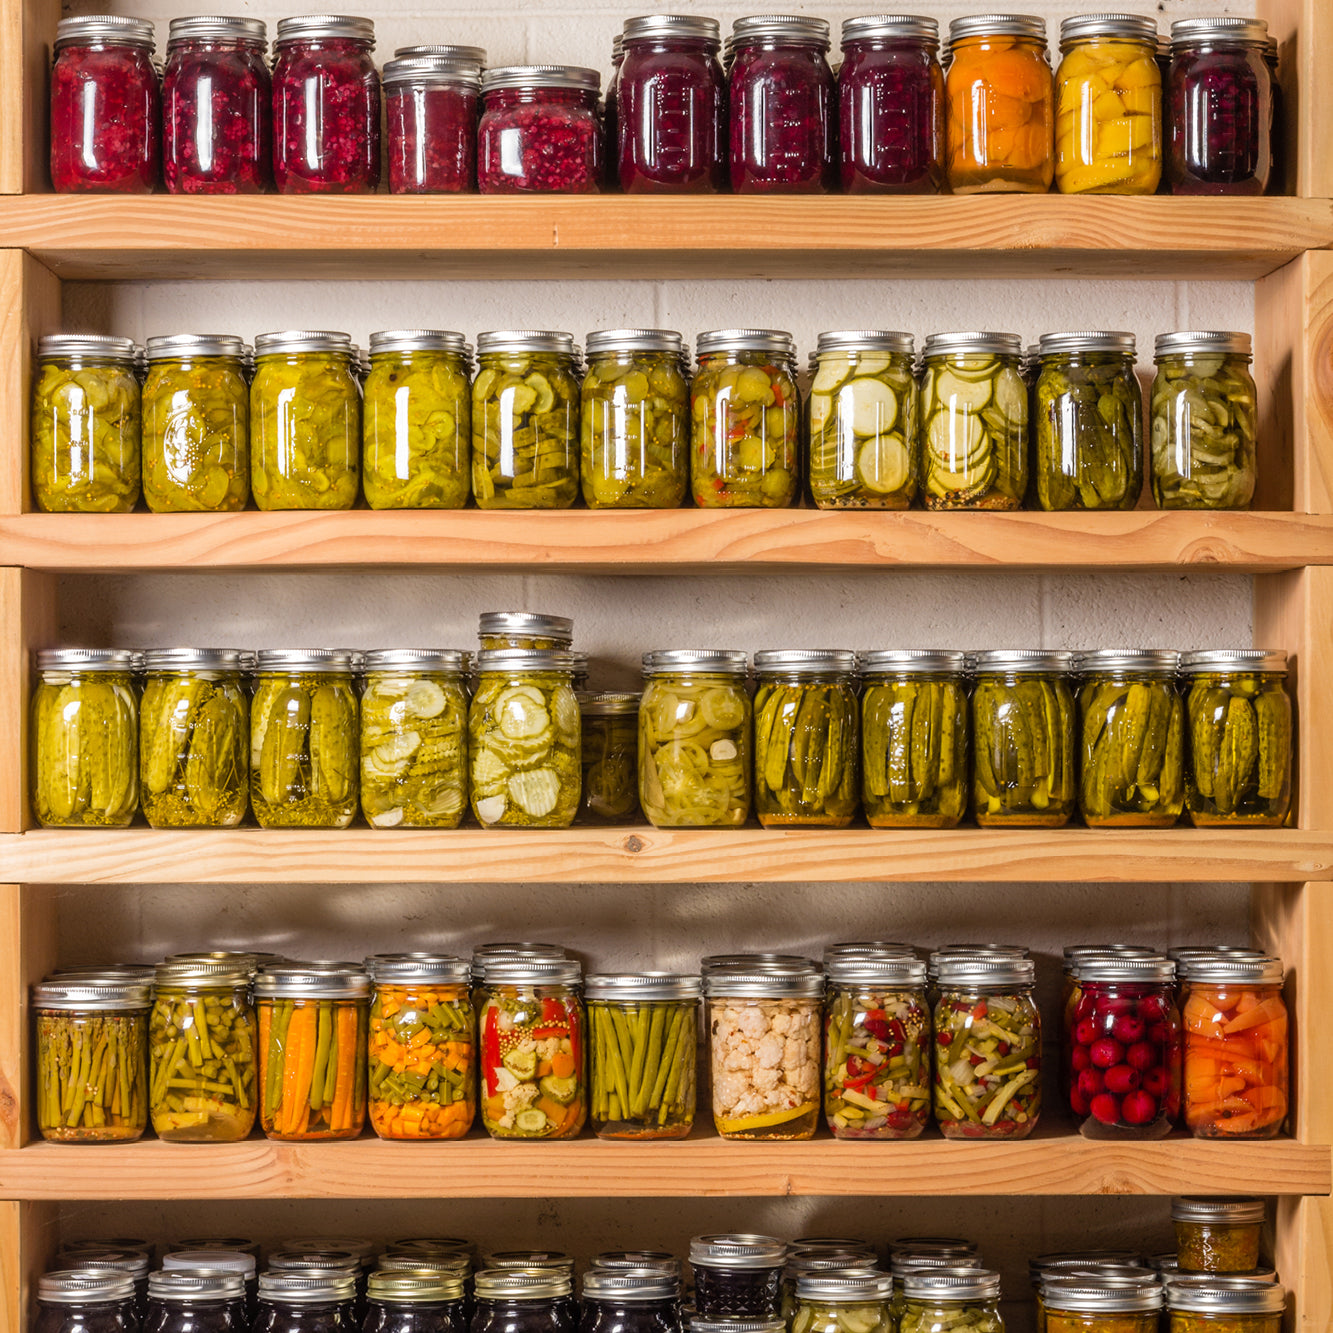 jarred foods on a shelf